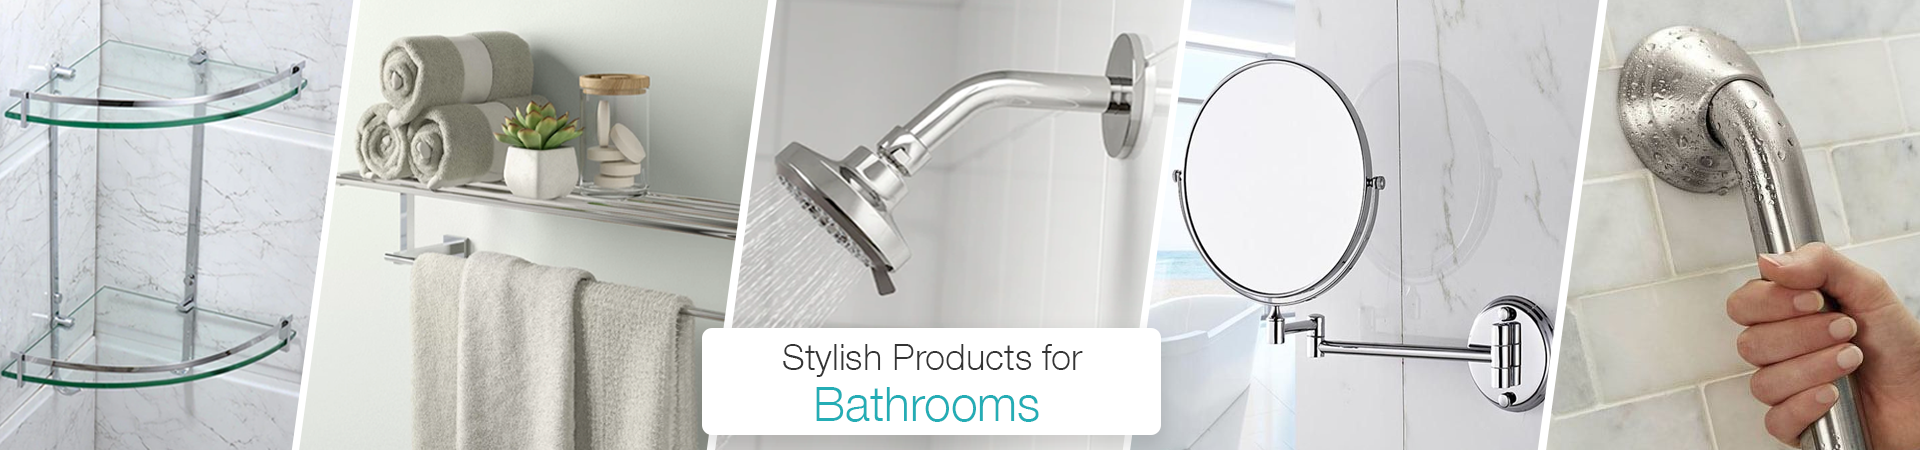 Bathroom Accessories - Grab Bars - Towel Racks - Shower arms